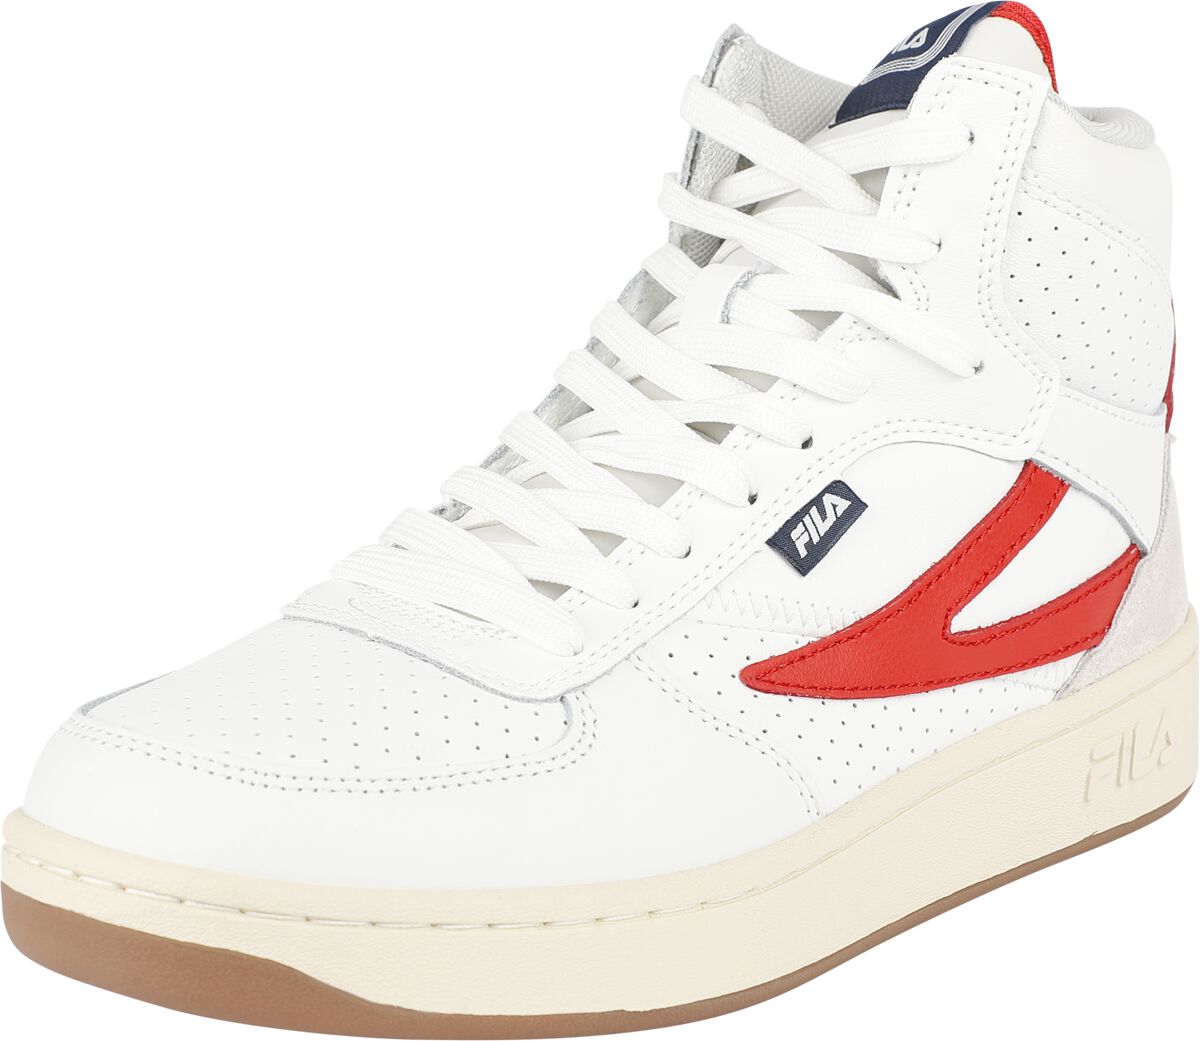 Fila Sneaker high - FILA SEVARO mid wmn - EU36 bis EU40 - für Damen - Größe EU36 - weiß/rot von Fila